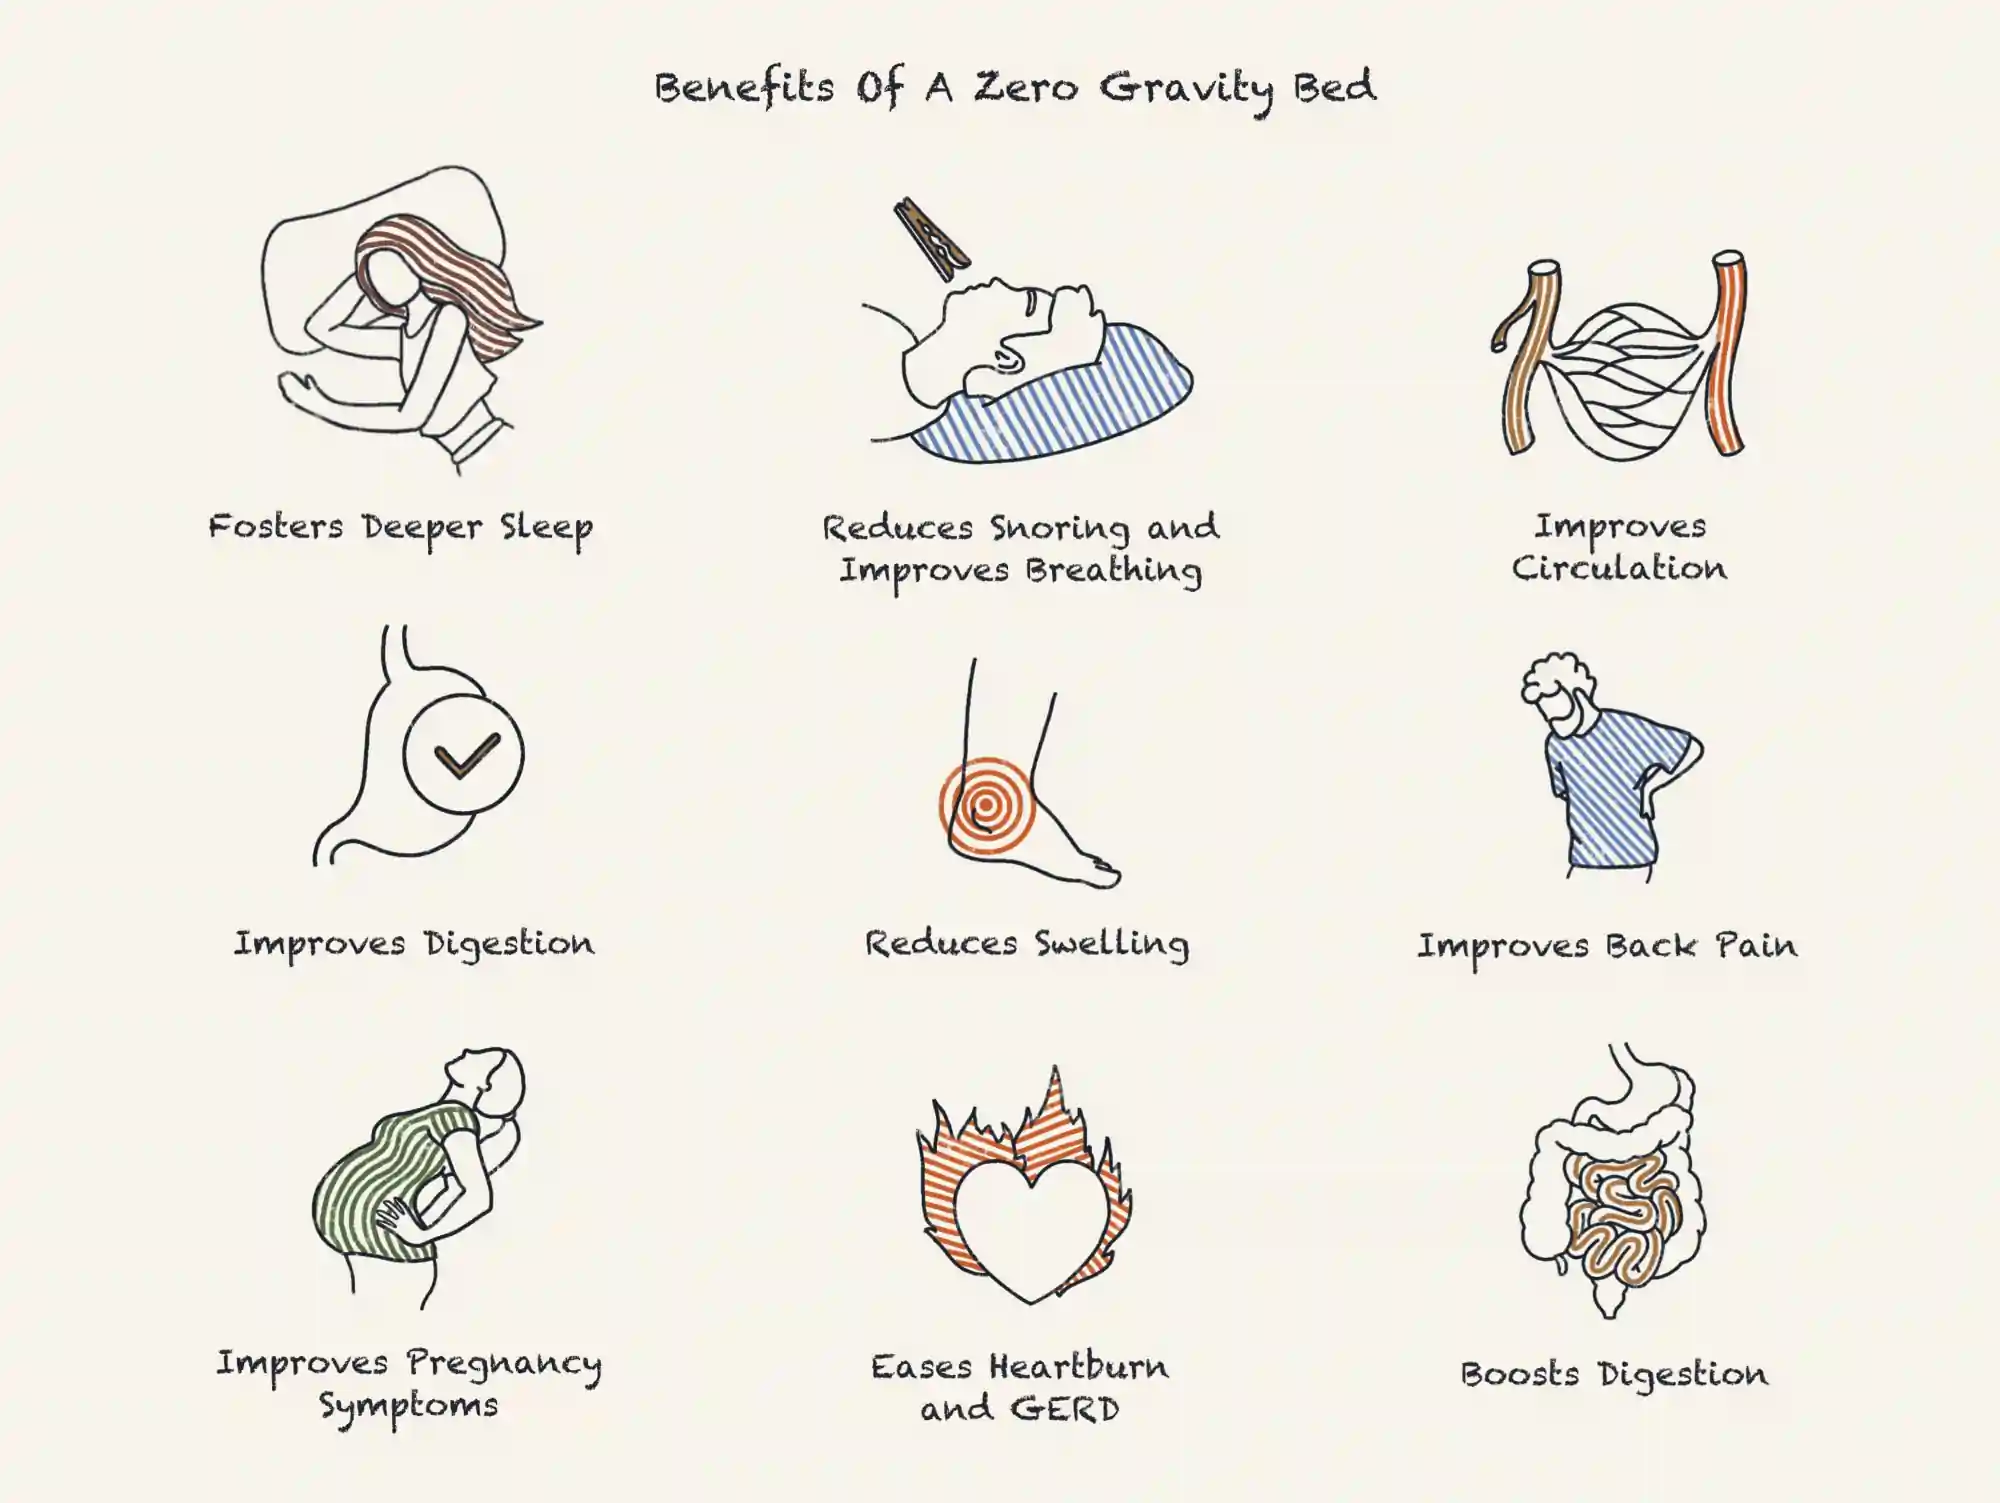 Illustration of Benefits of Zero Gravity Bed